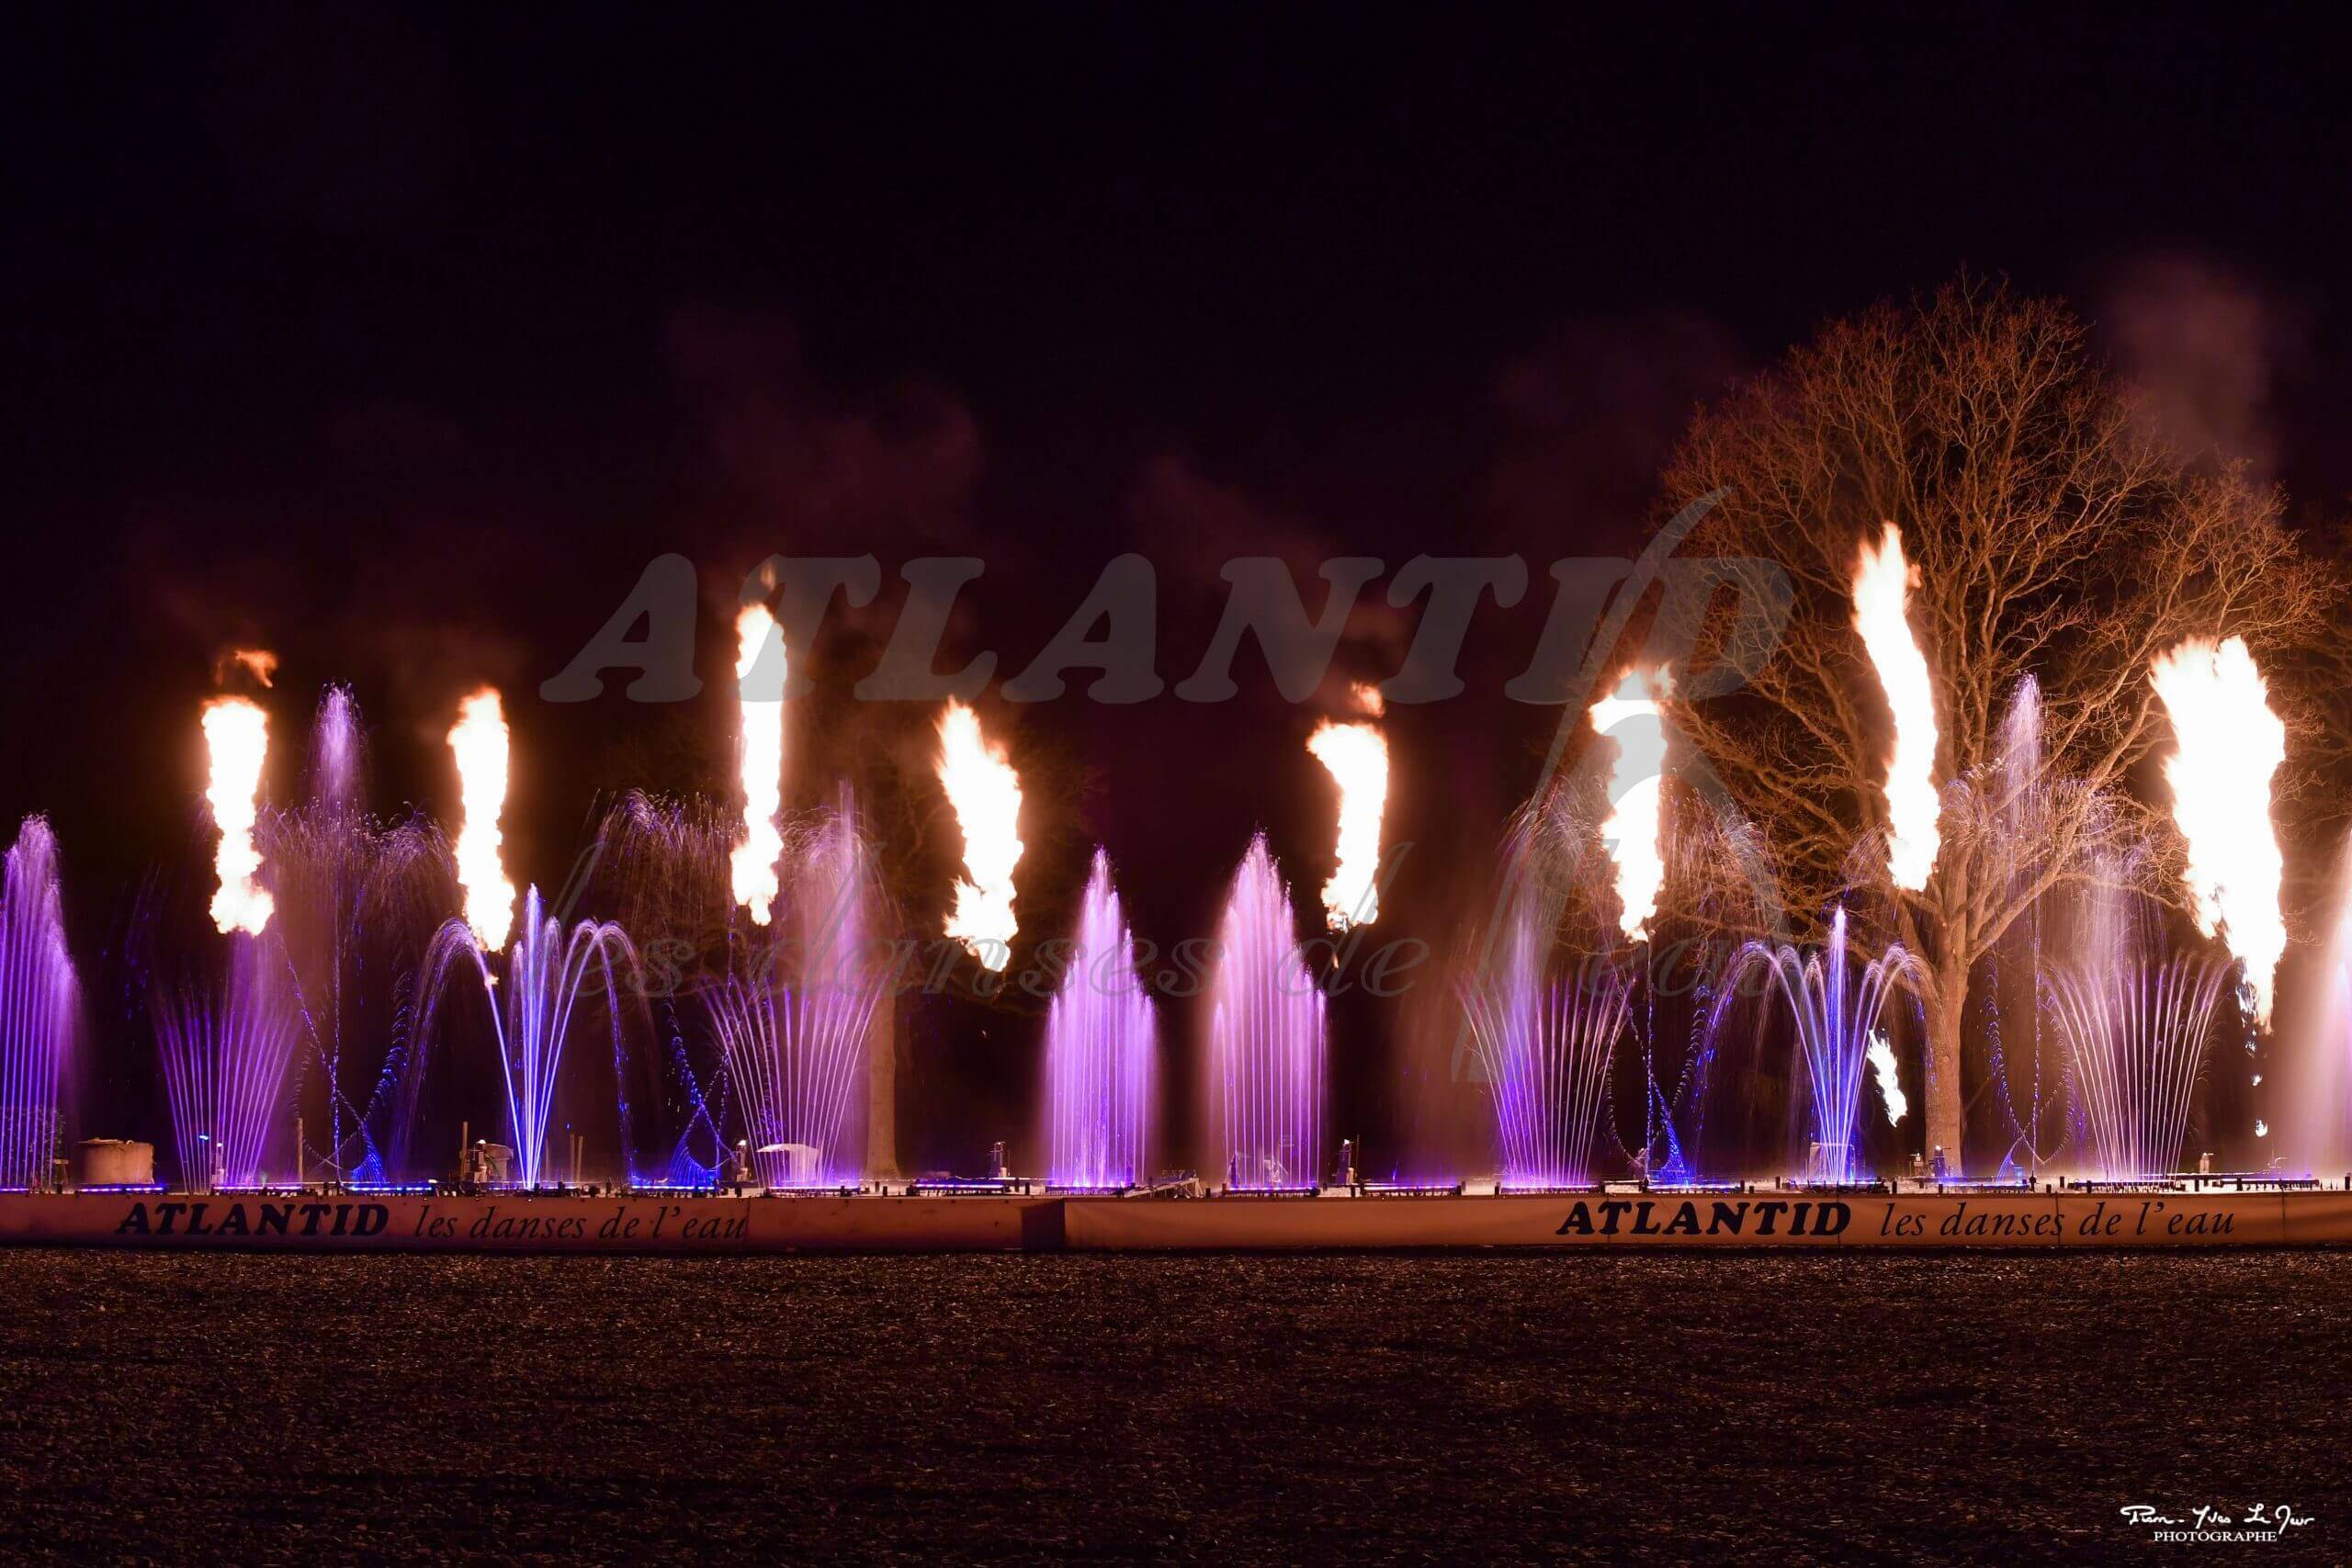 Atlantid - Photo de flammes